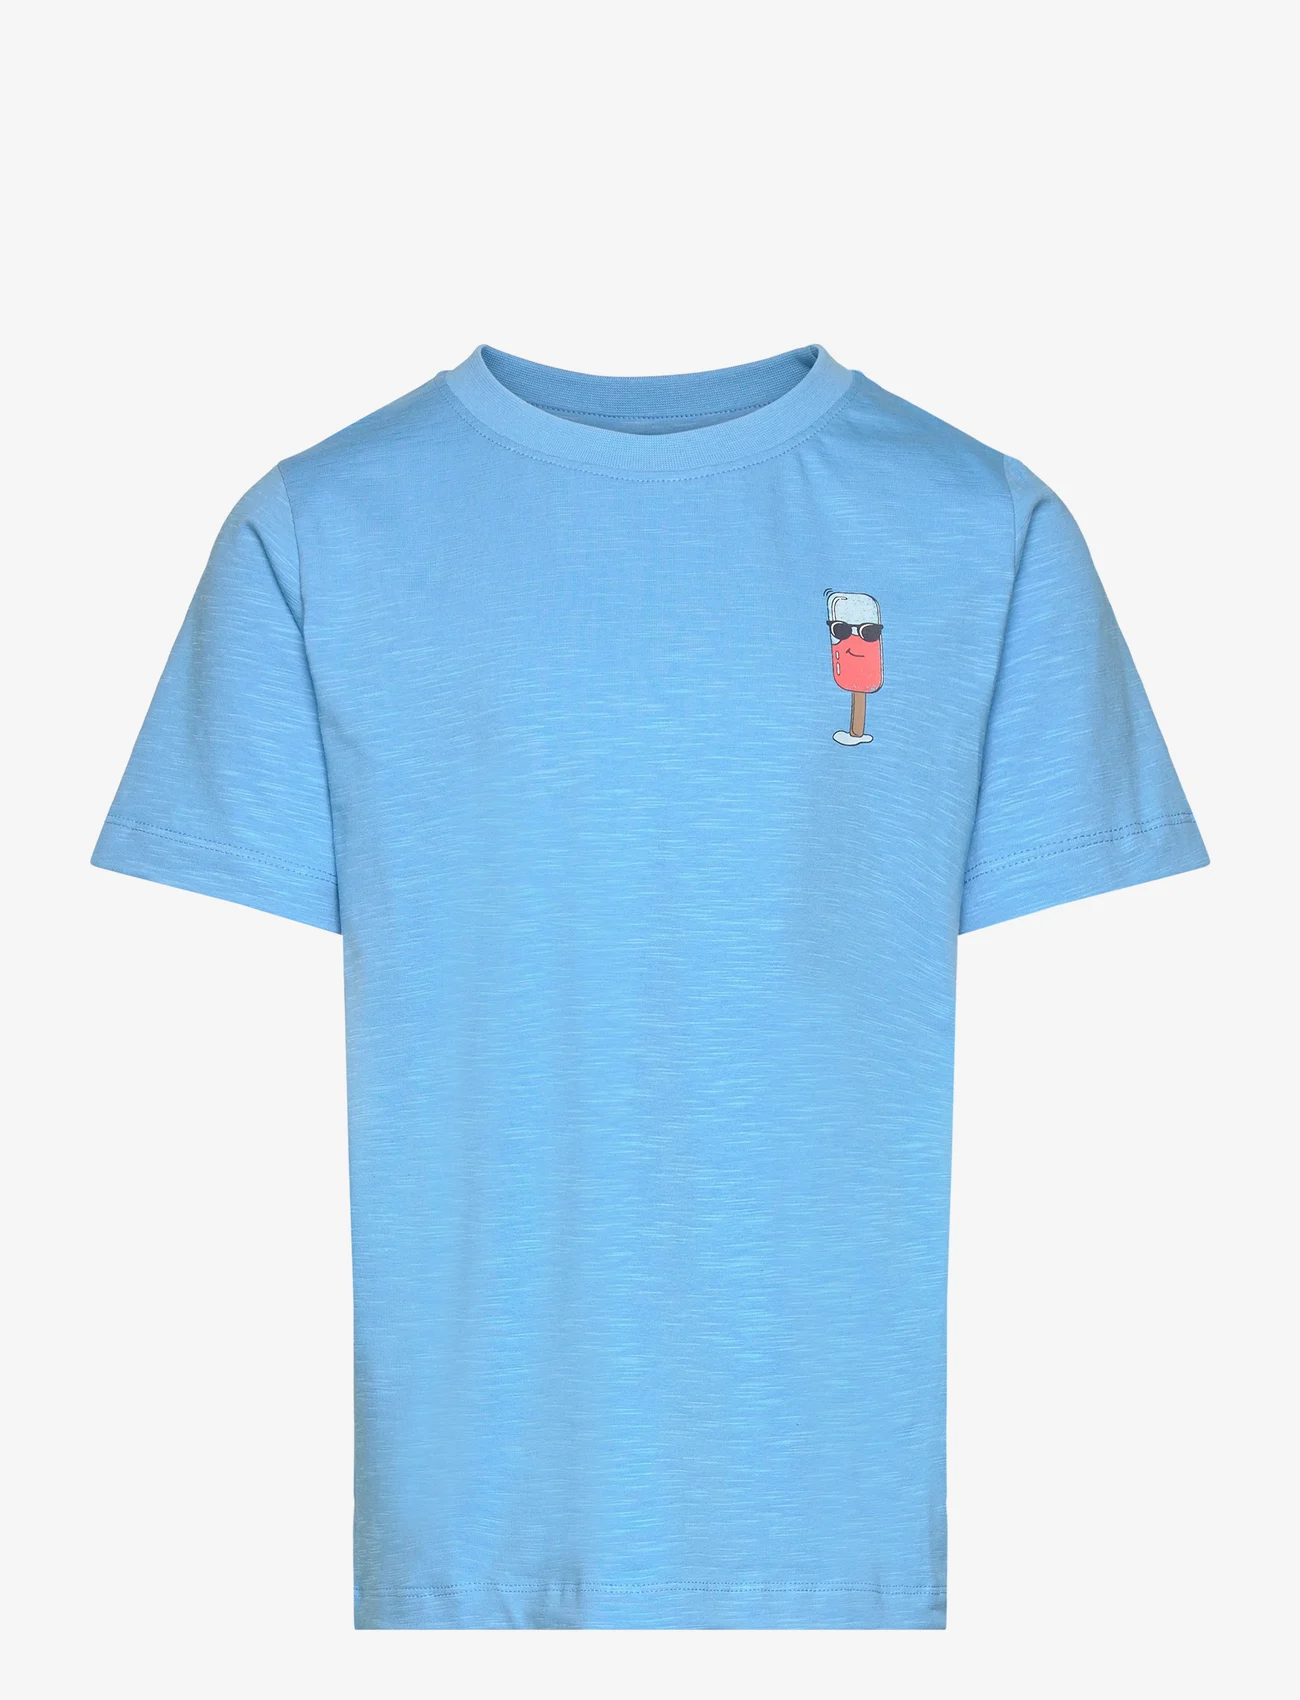 Minymo - T-shirt SS - kortærmede t-shirts - bonnie blue - 0